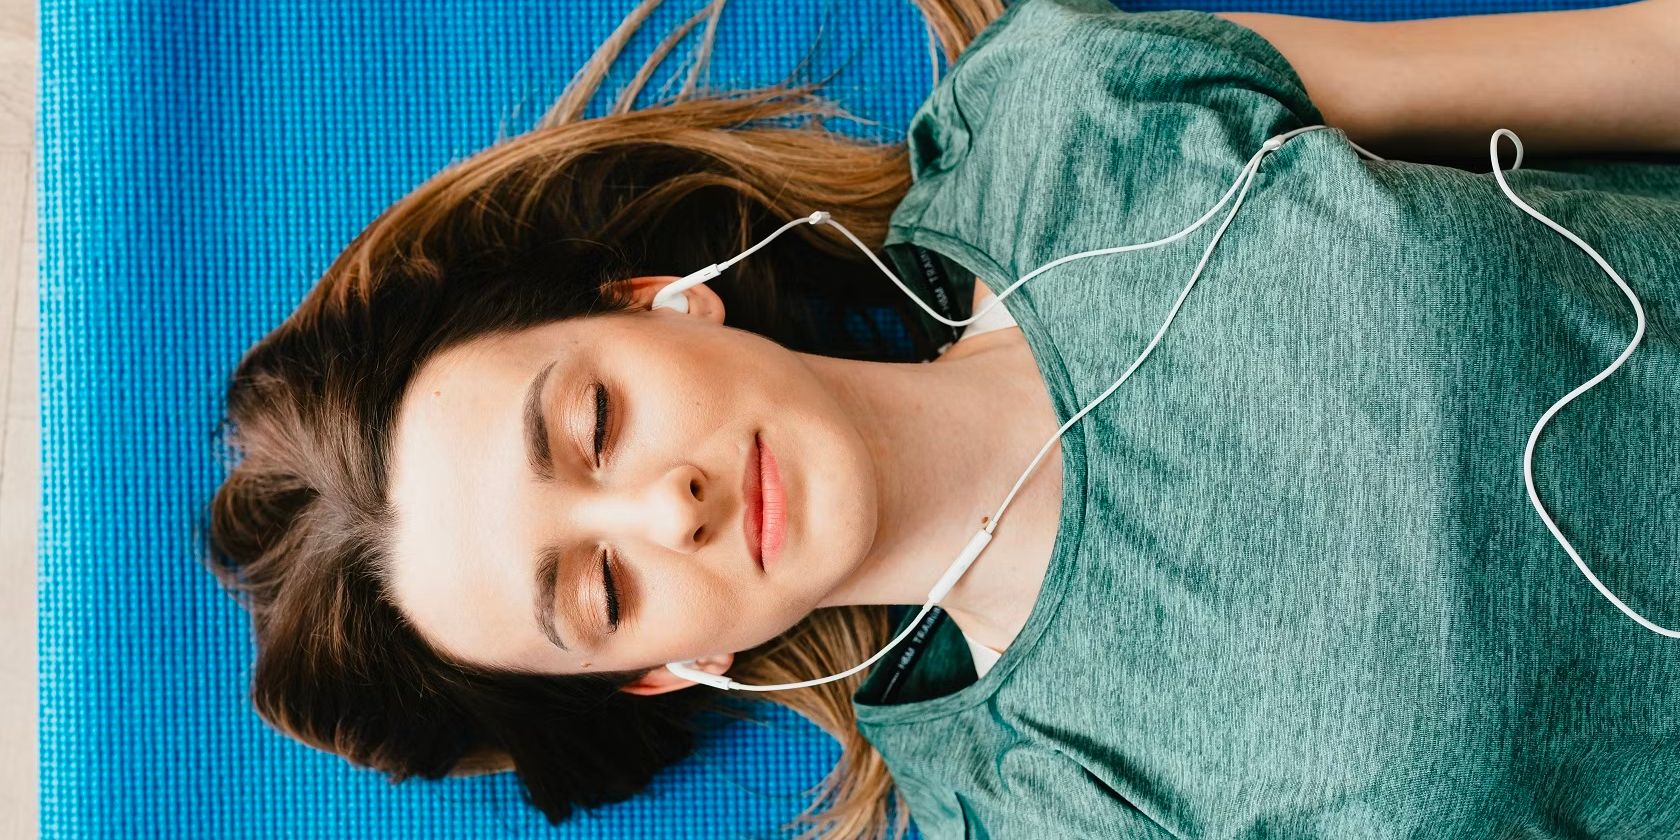 Woman resting on yoga mat wearing earphones